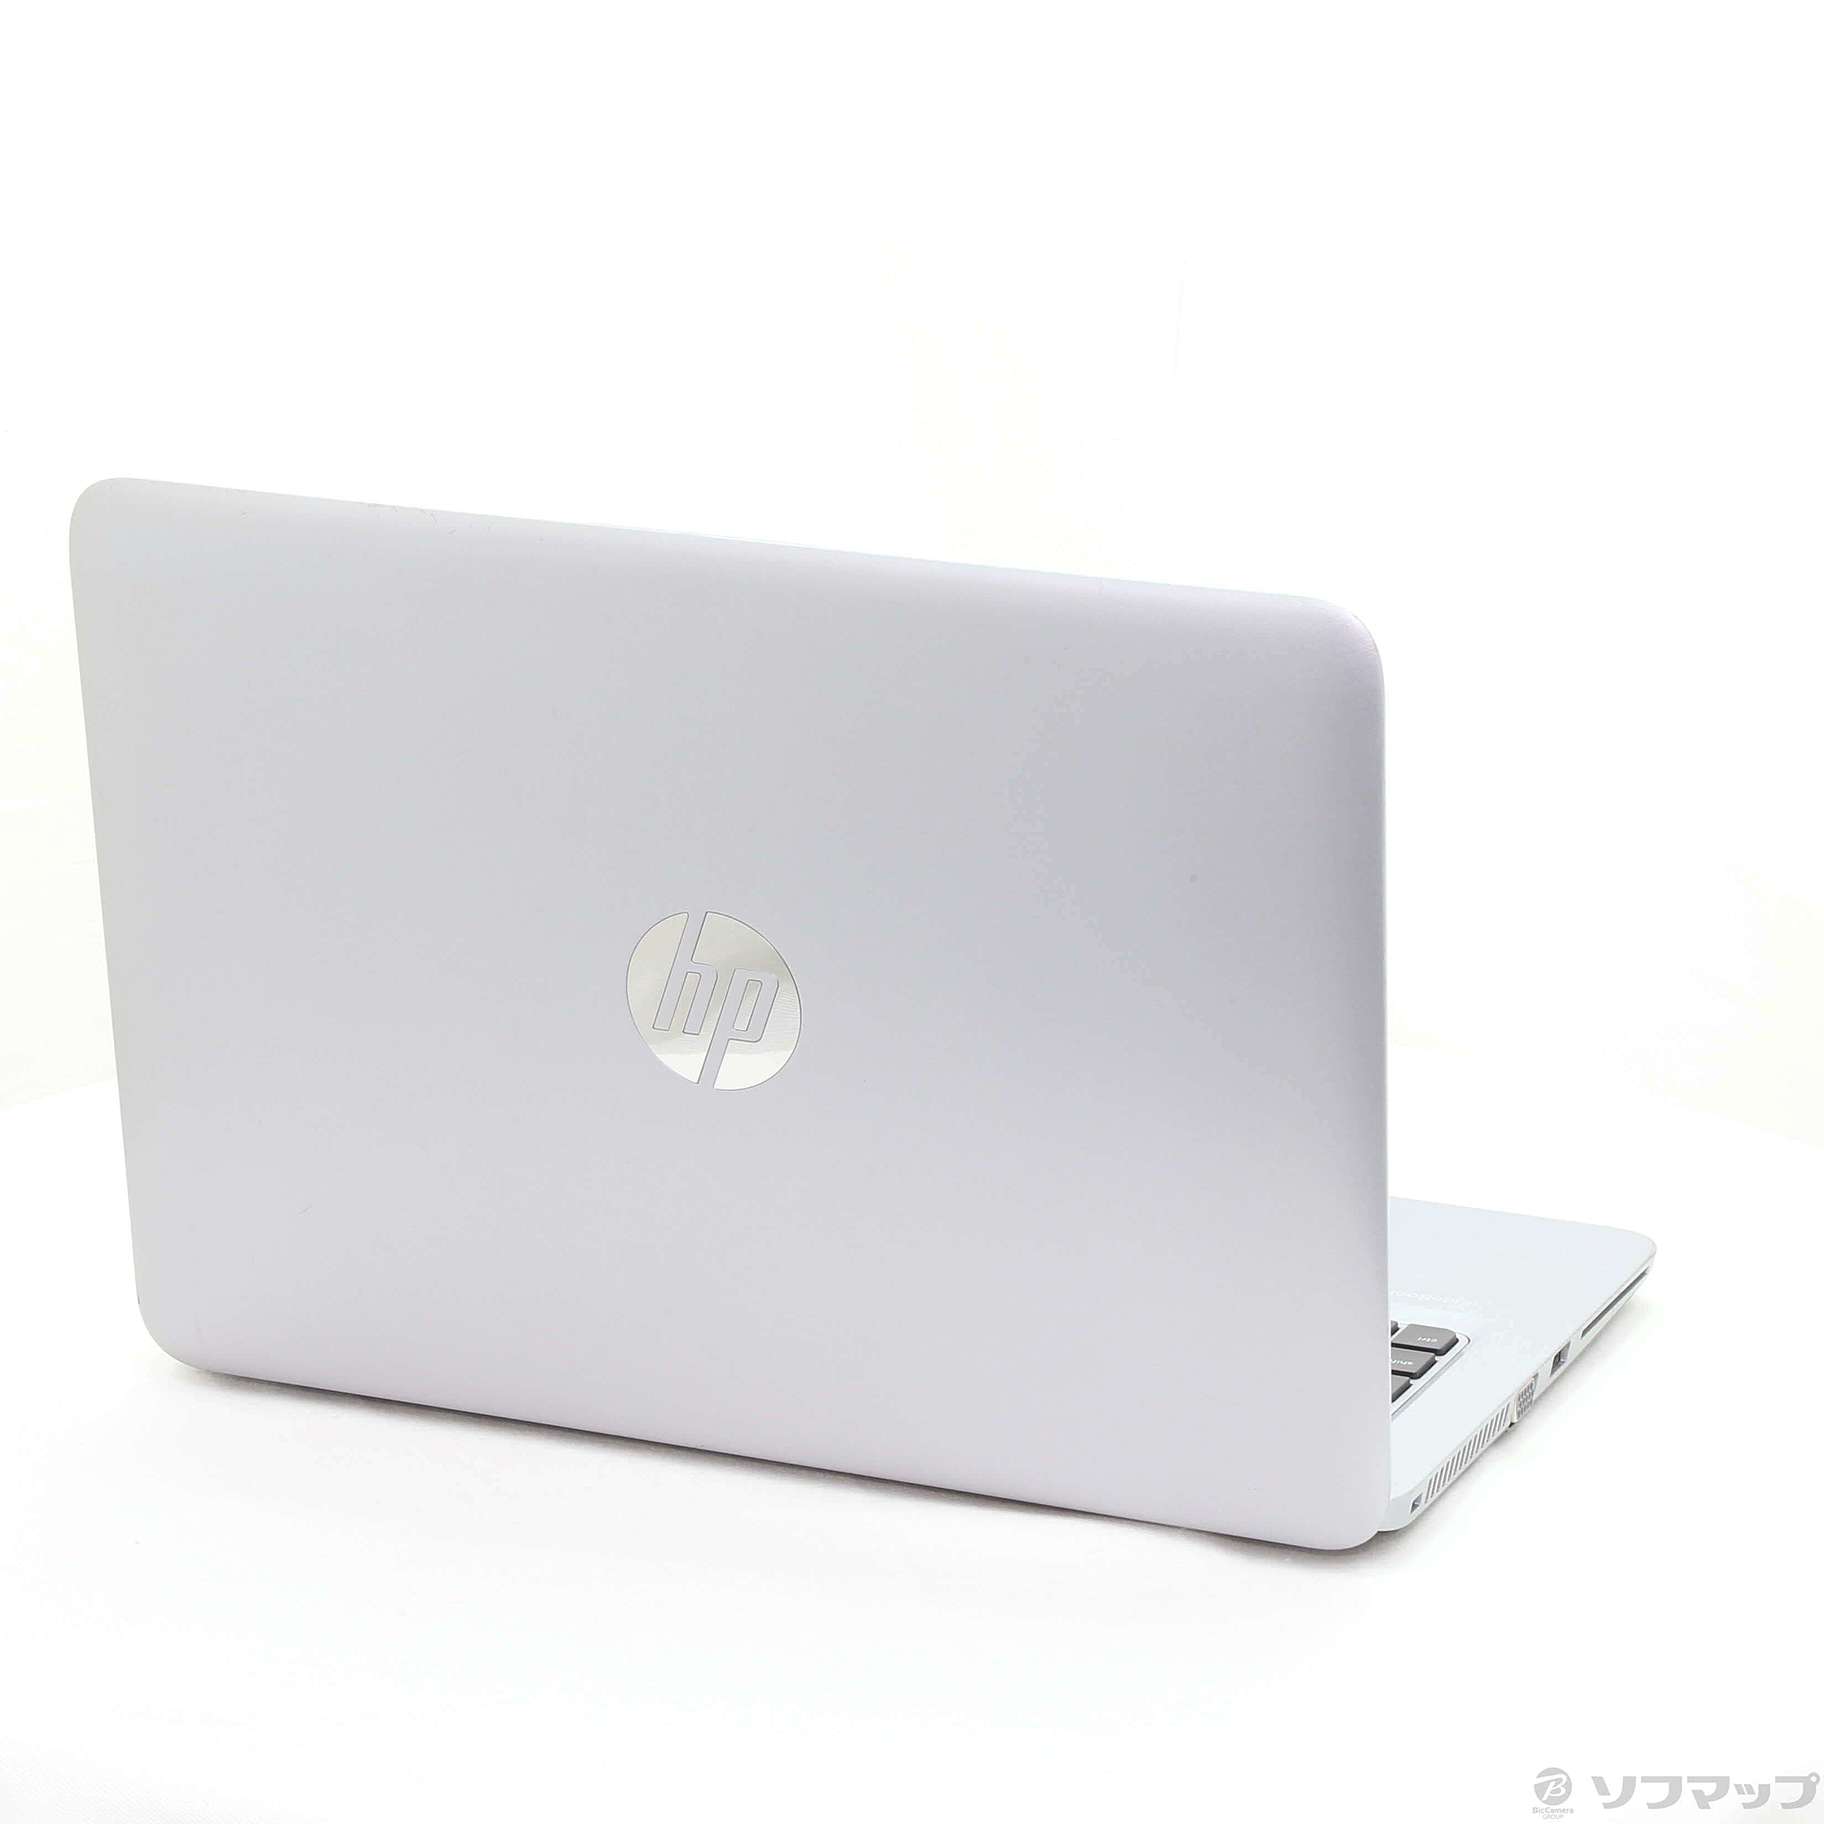 中古】HP EliteBook 820 G3 〔IBM Refreshed PC〕 〔Windows 10〕 ◇01